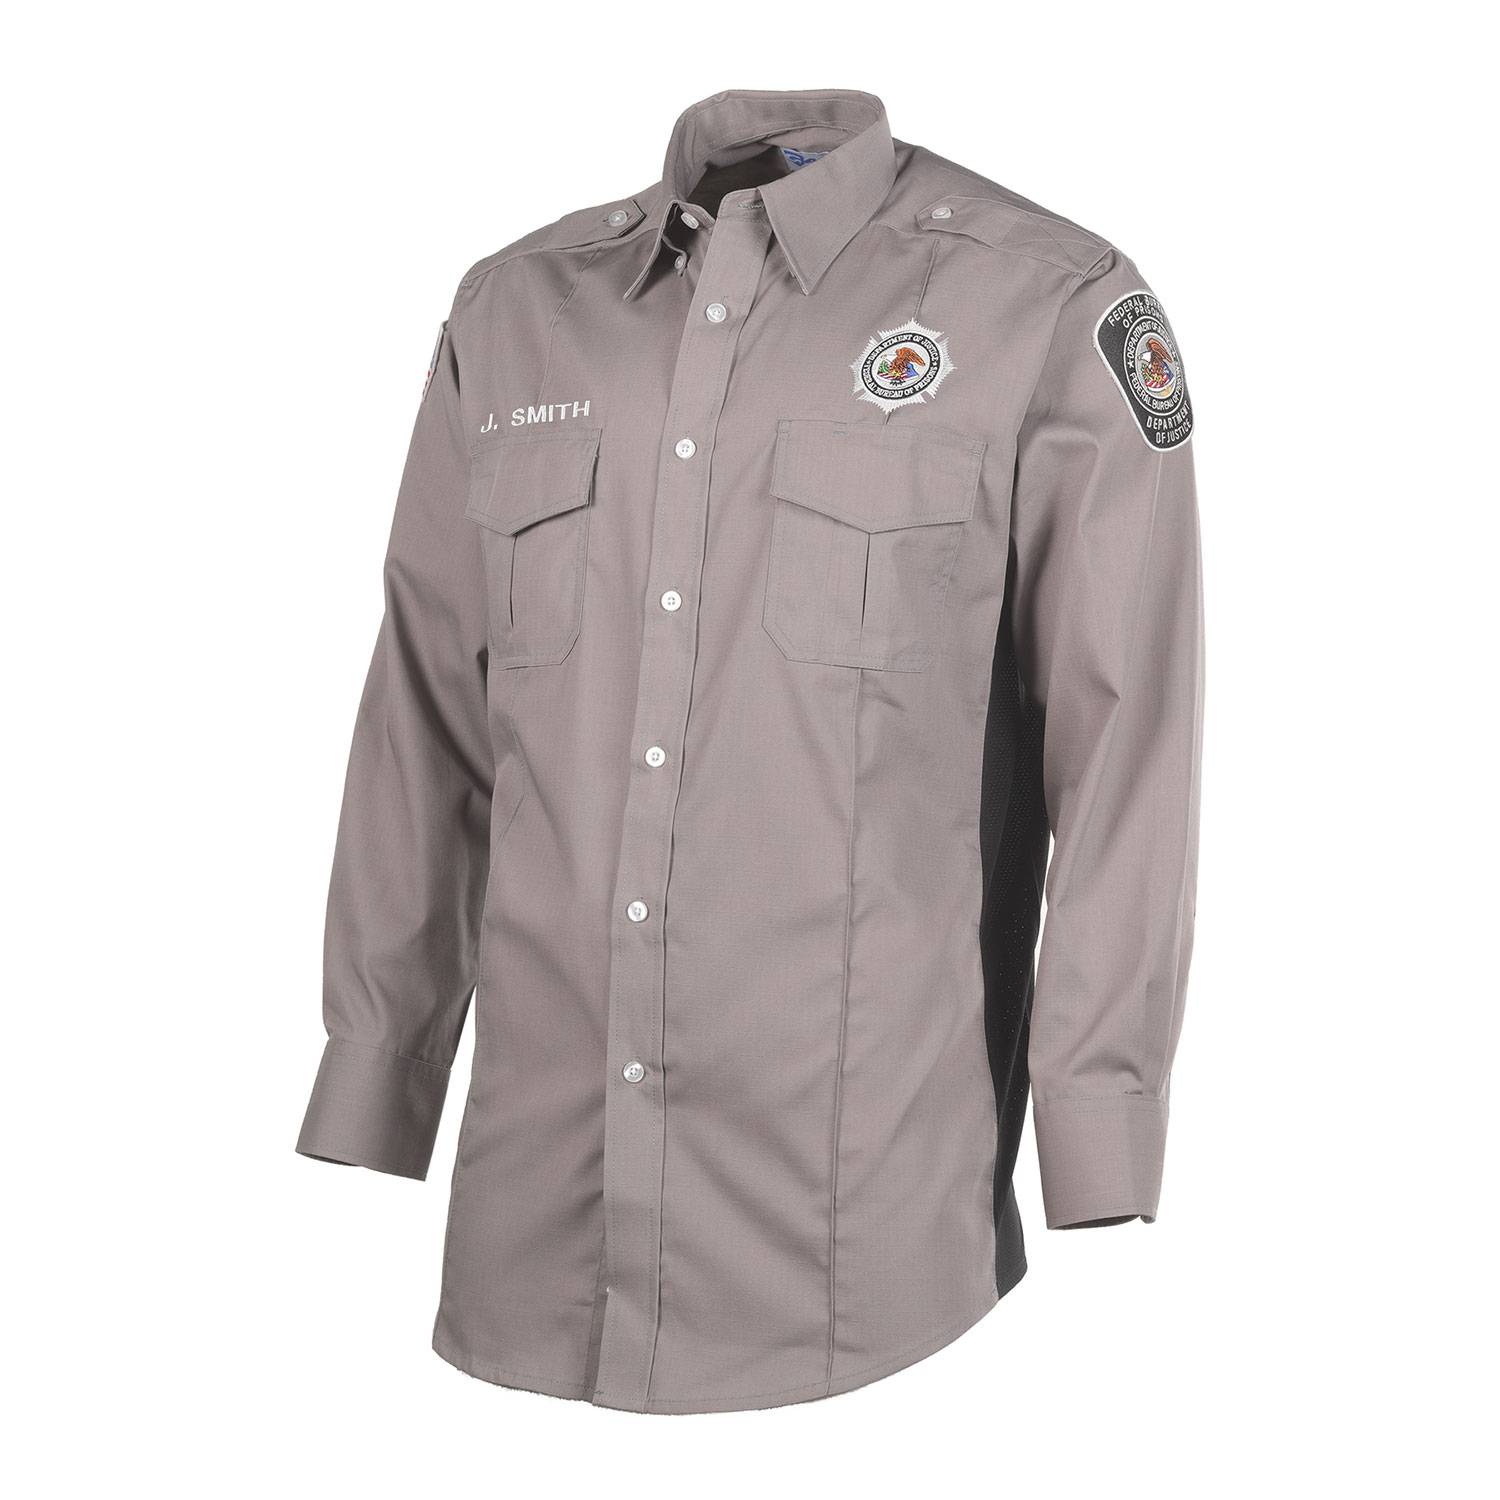 Galls FBOP Men's Utility Long-Sleeve Uniform Shirt (Nickel G